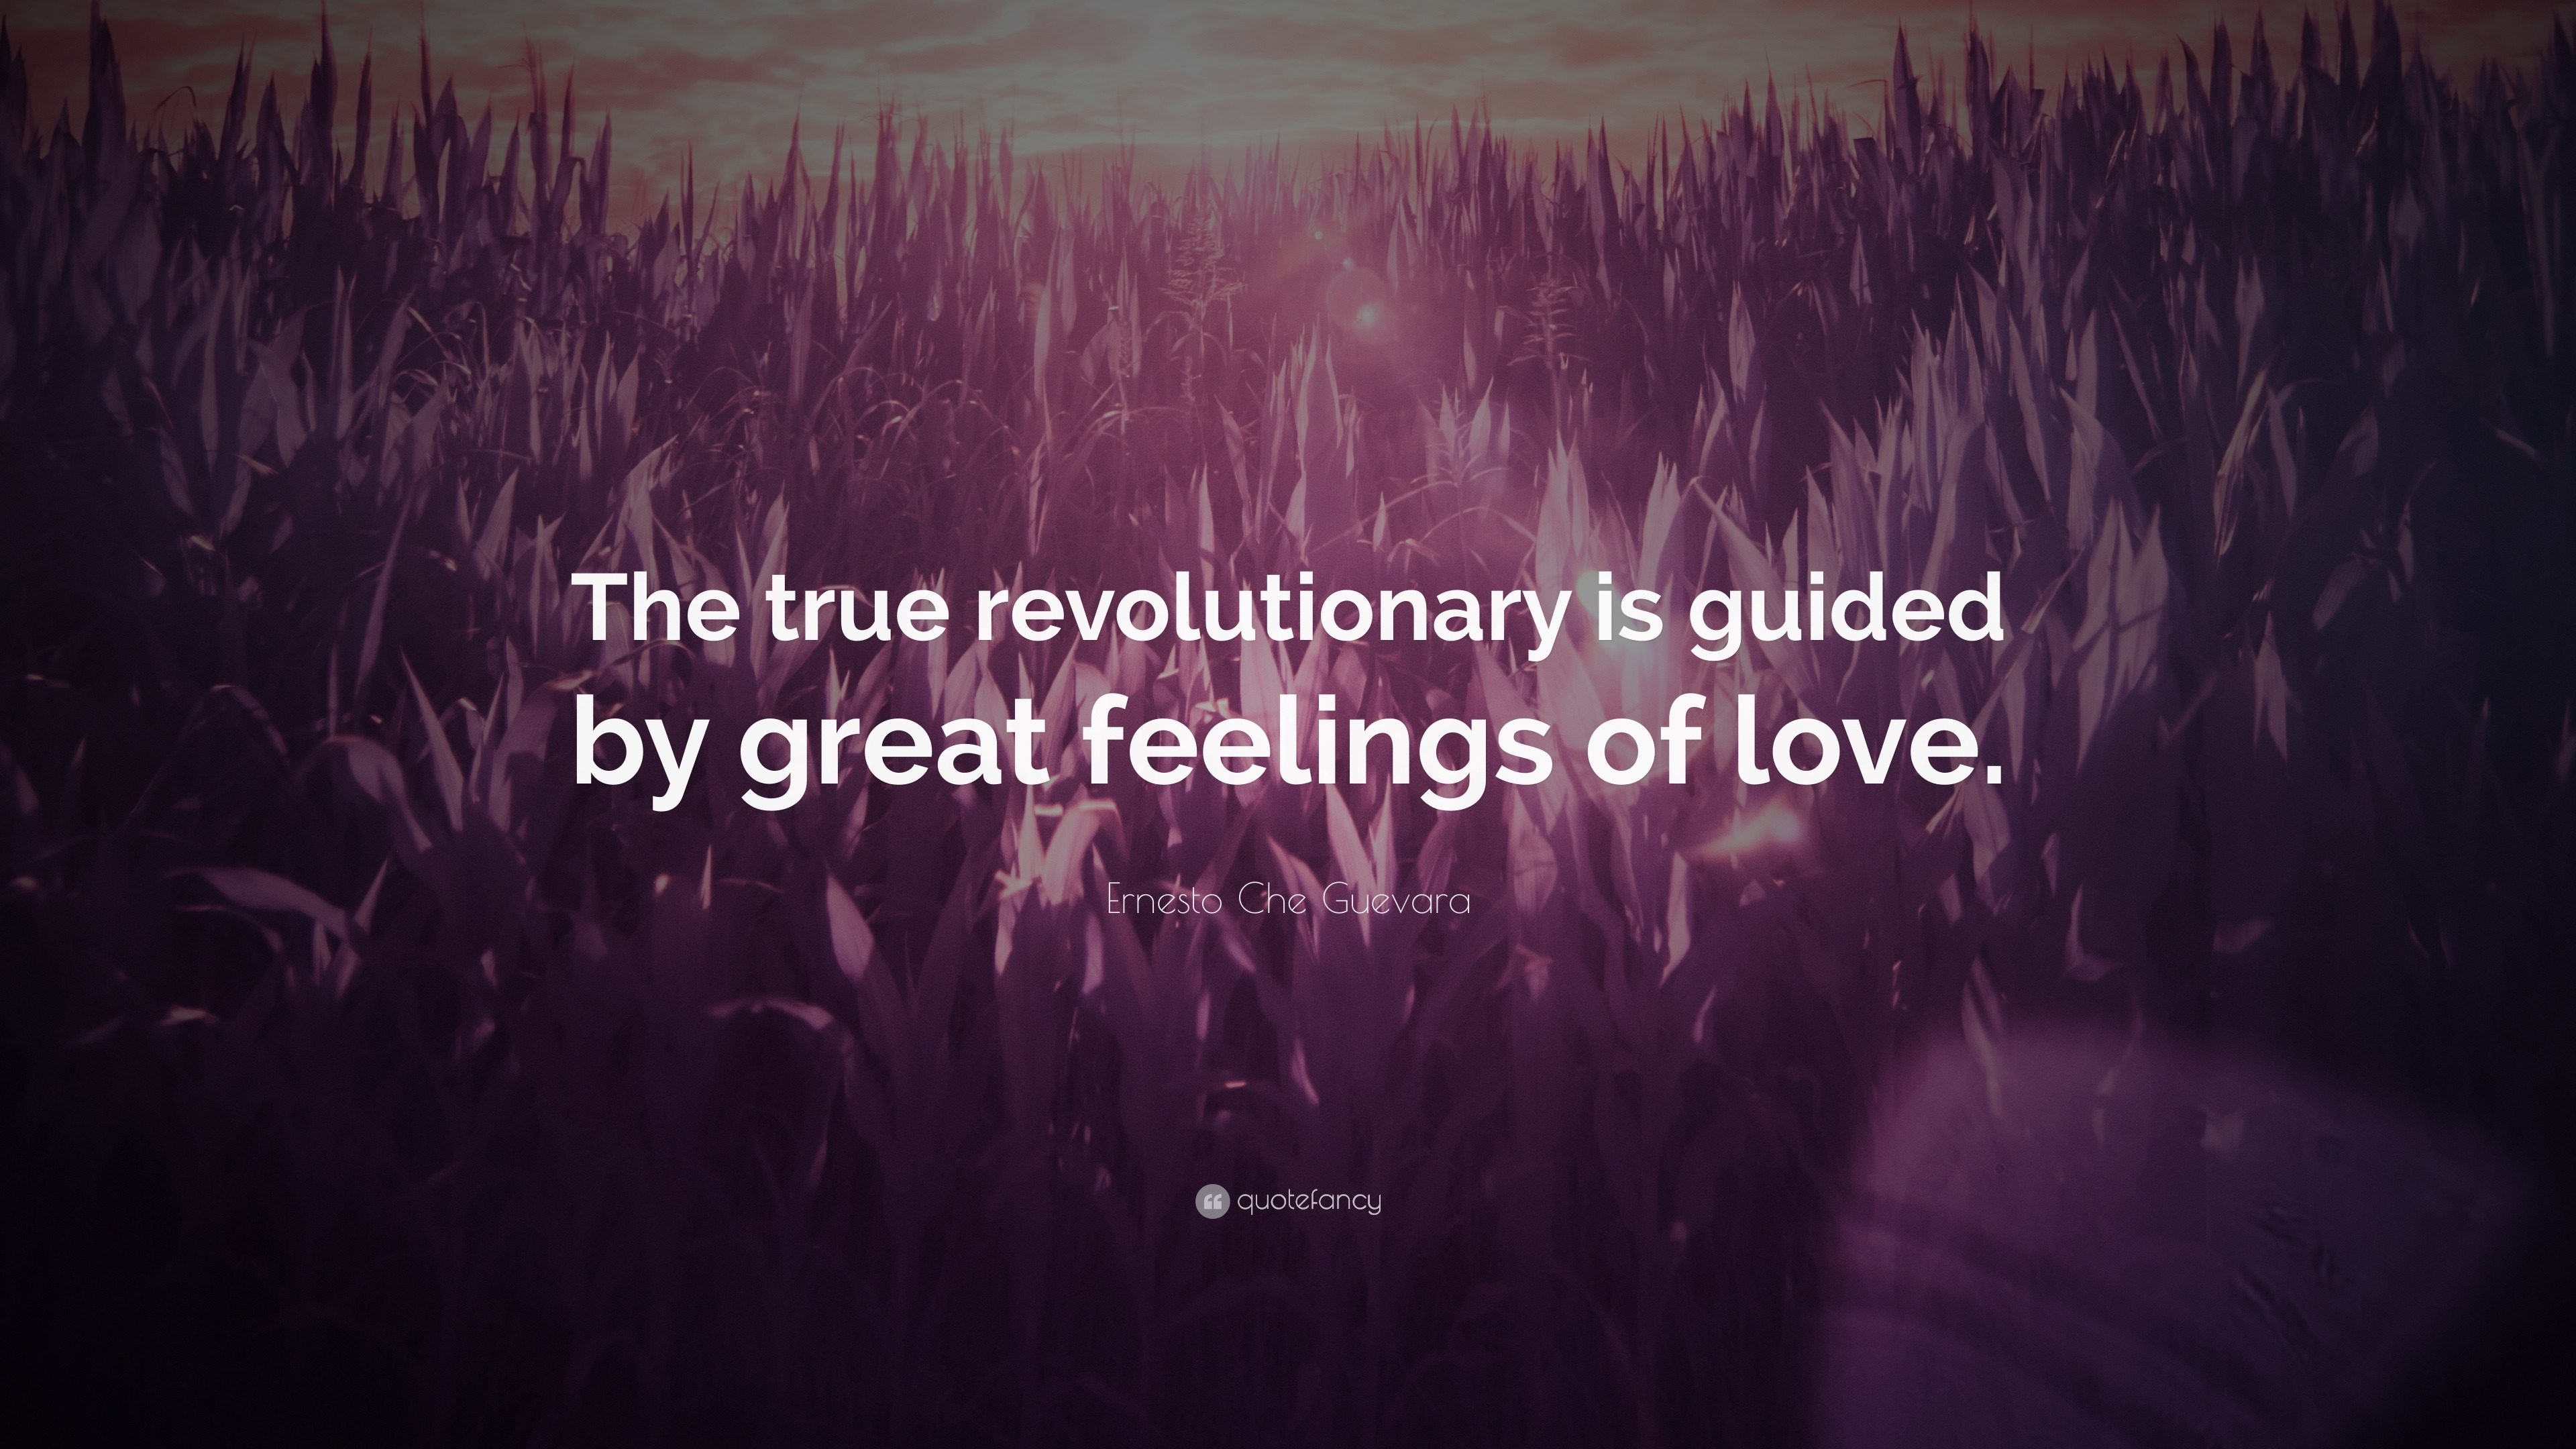 che guevara revolutionary love